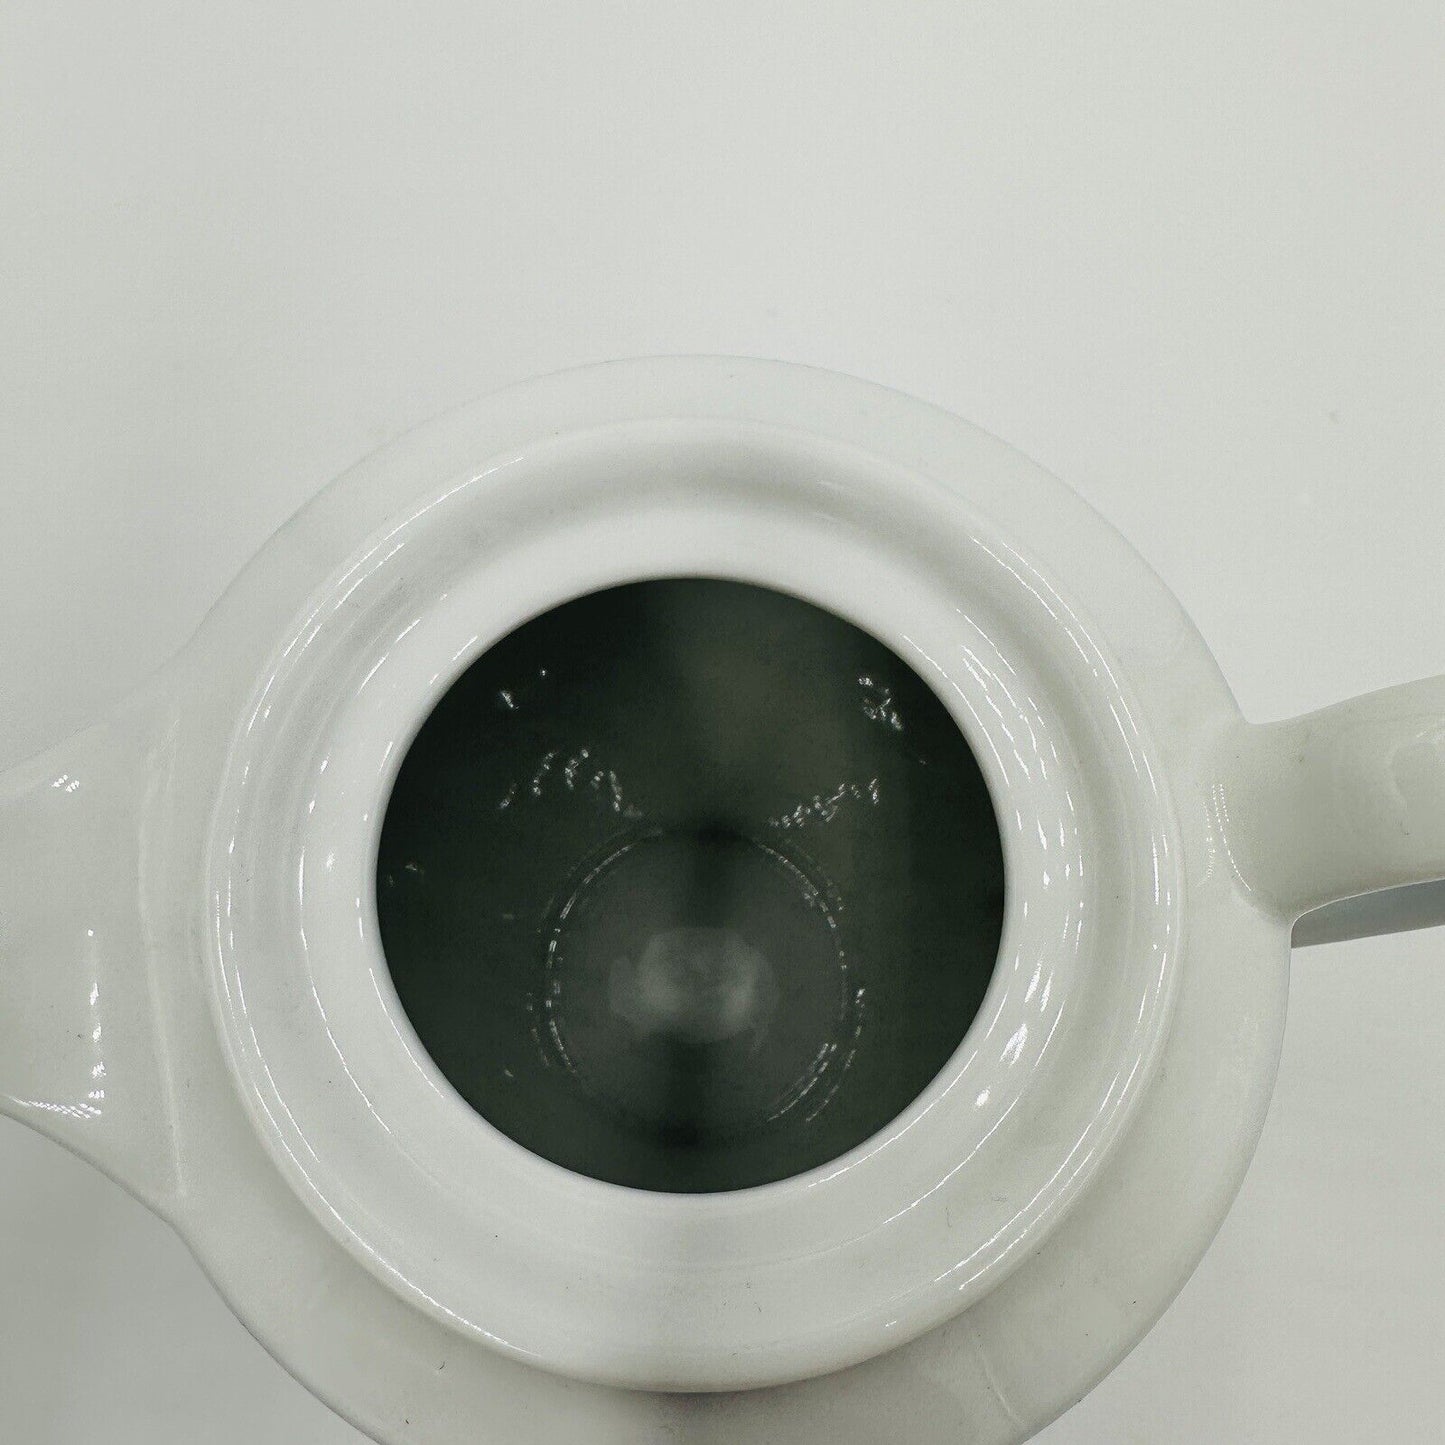 Wedgwood Coffee Pot Mikado Blue and White Porcelain Servewear Vintage Home China